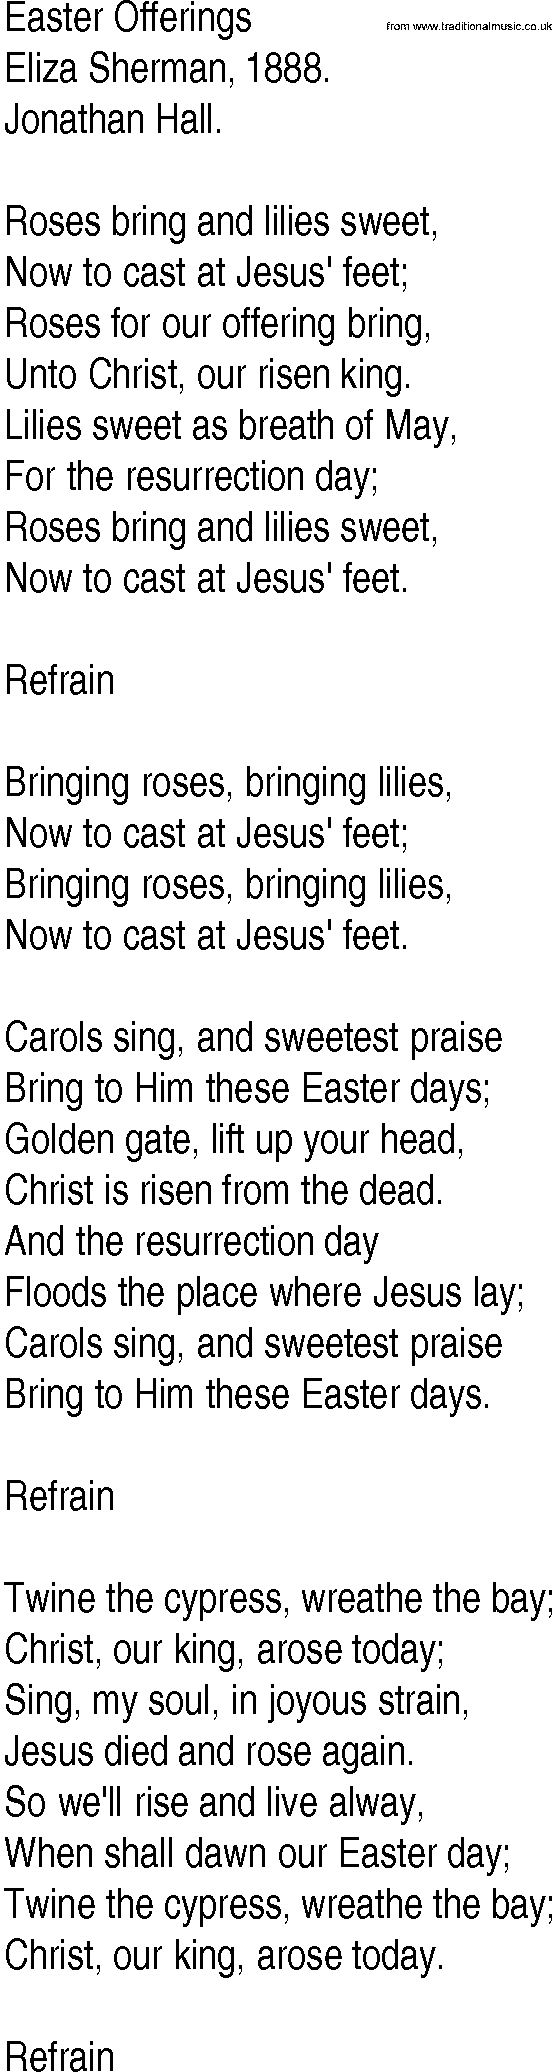 Hymn and Gospel Song: Easter Offerings by Eliza Sherman lyrics